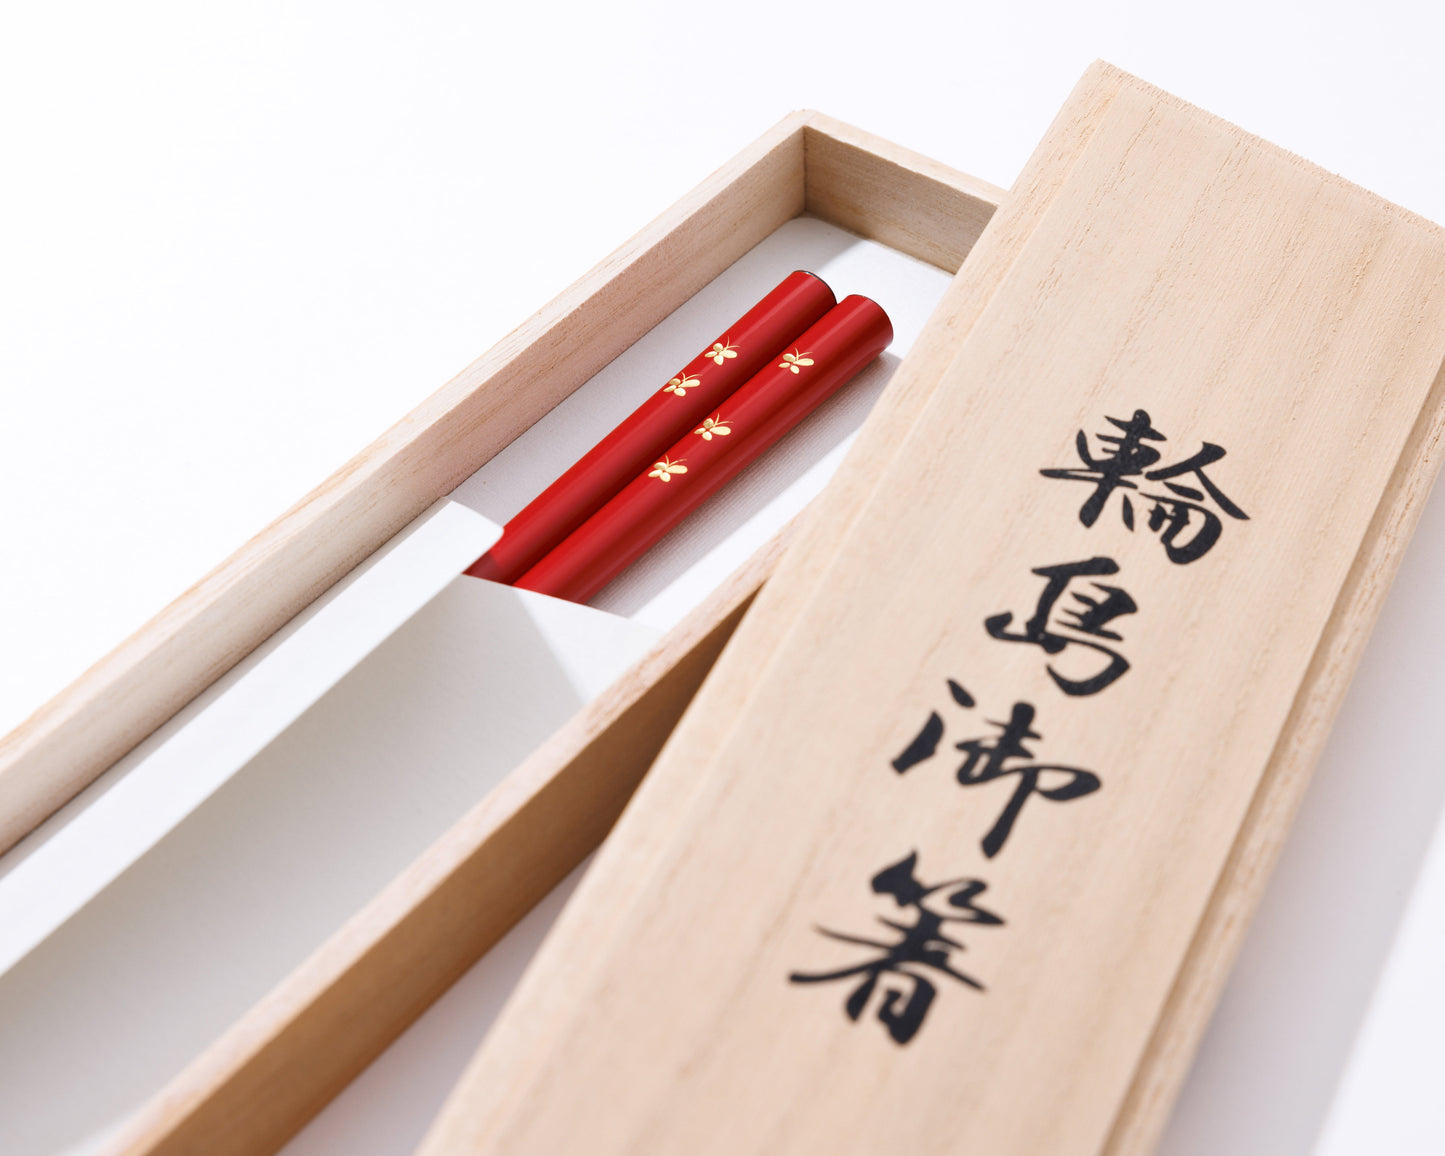 Wajimaya Zenni original chopsticks (Tame/chochinkin)